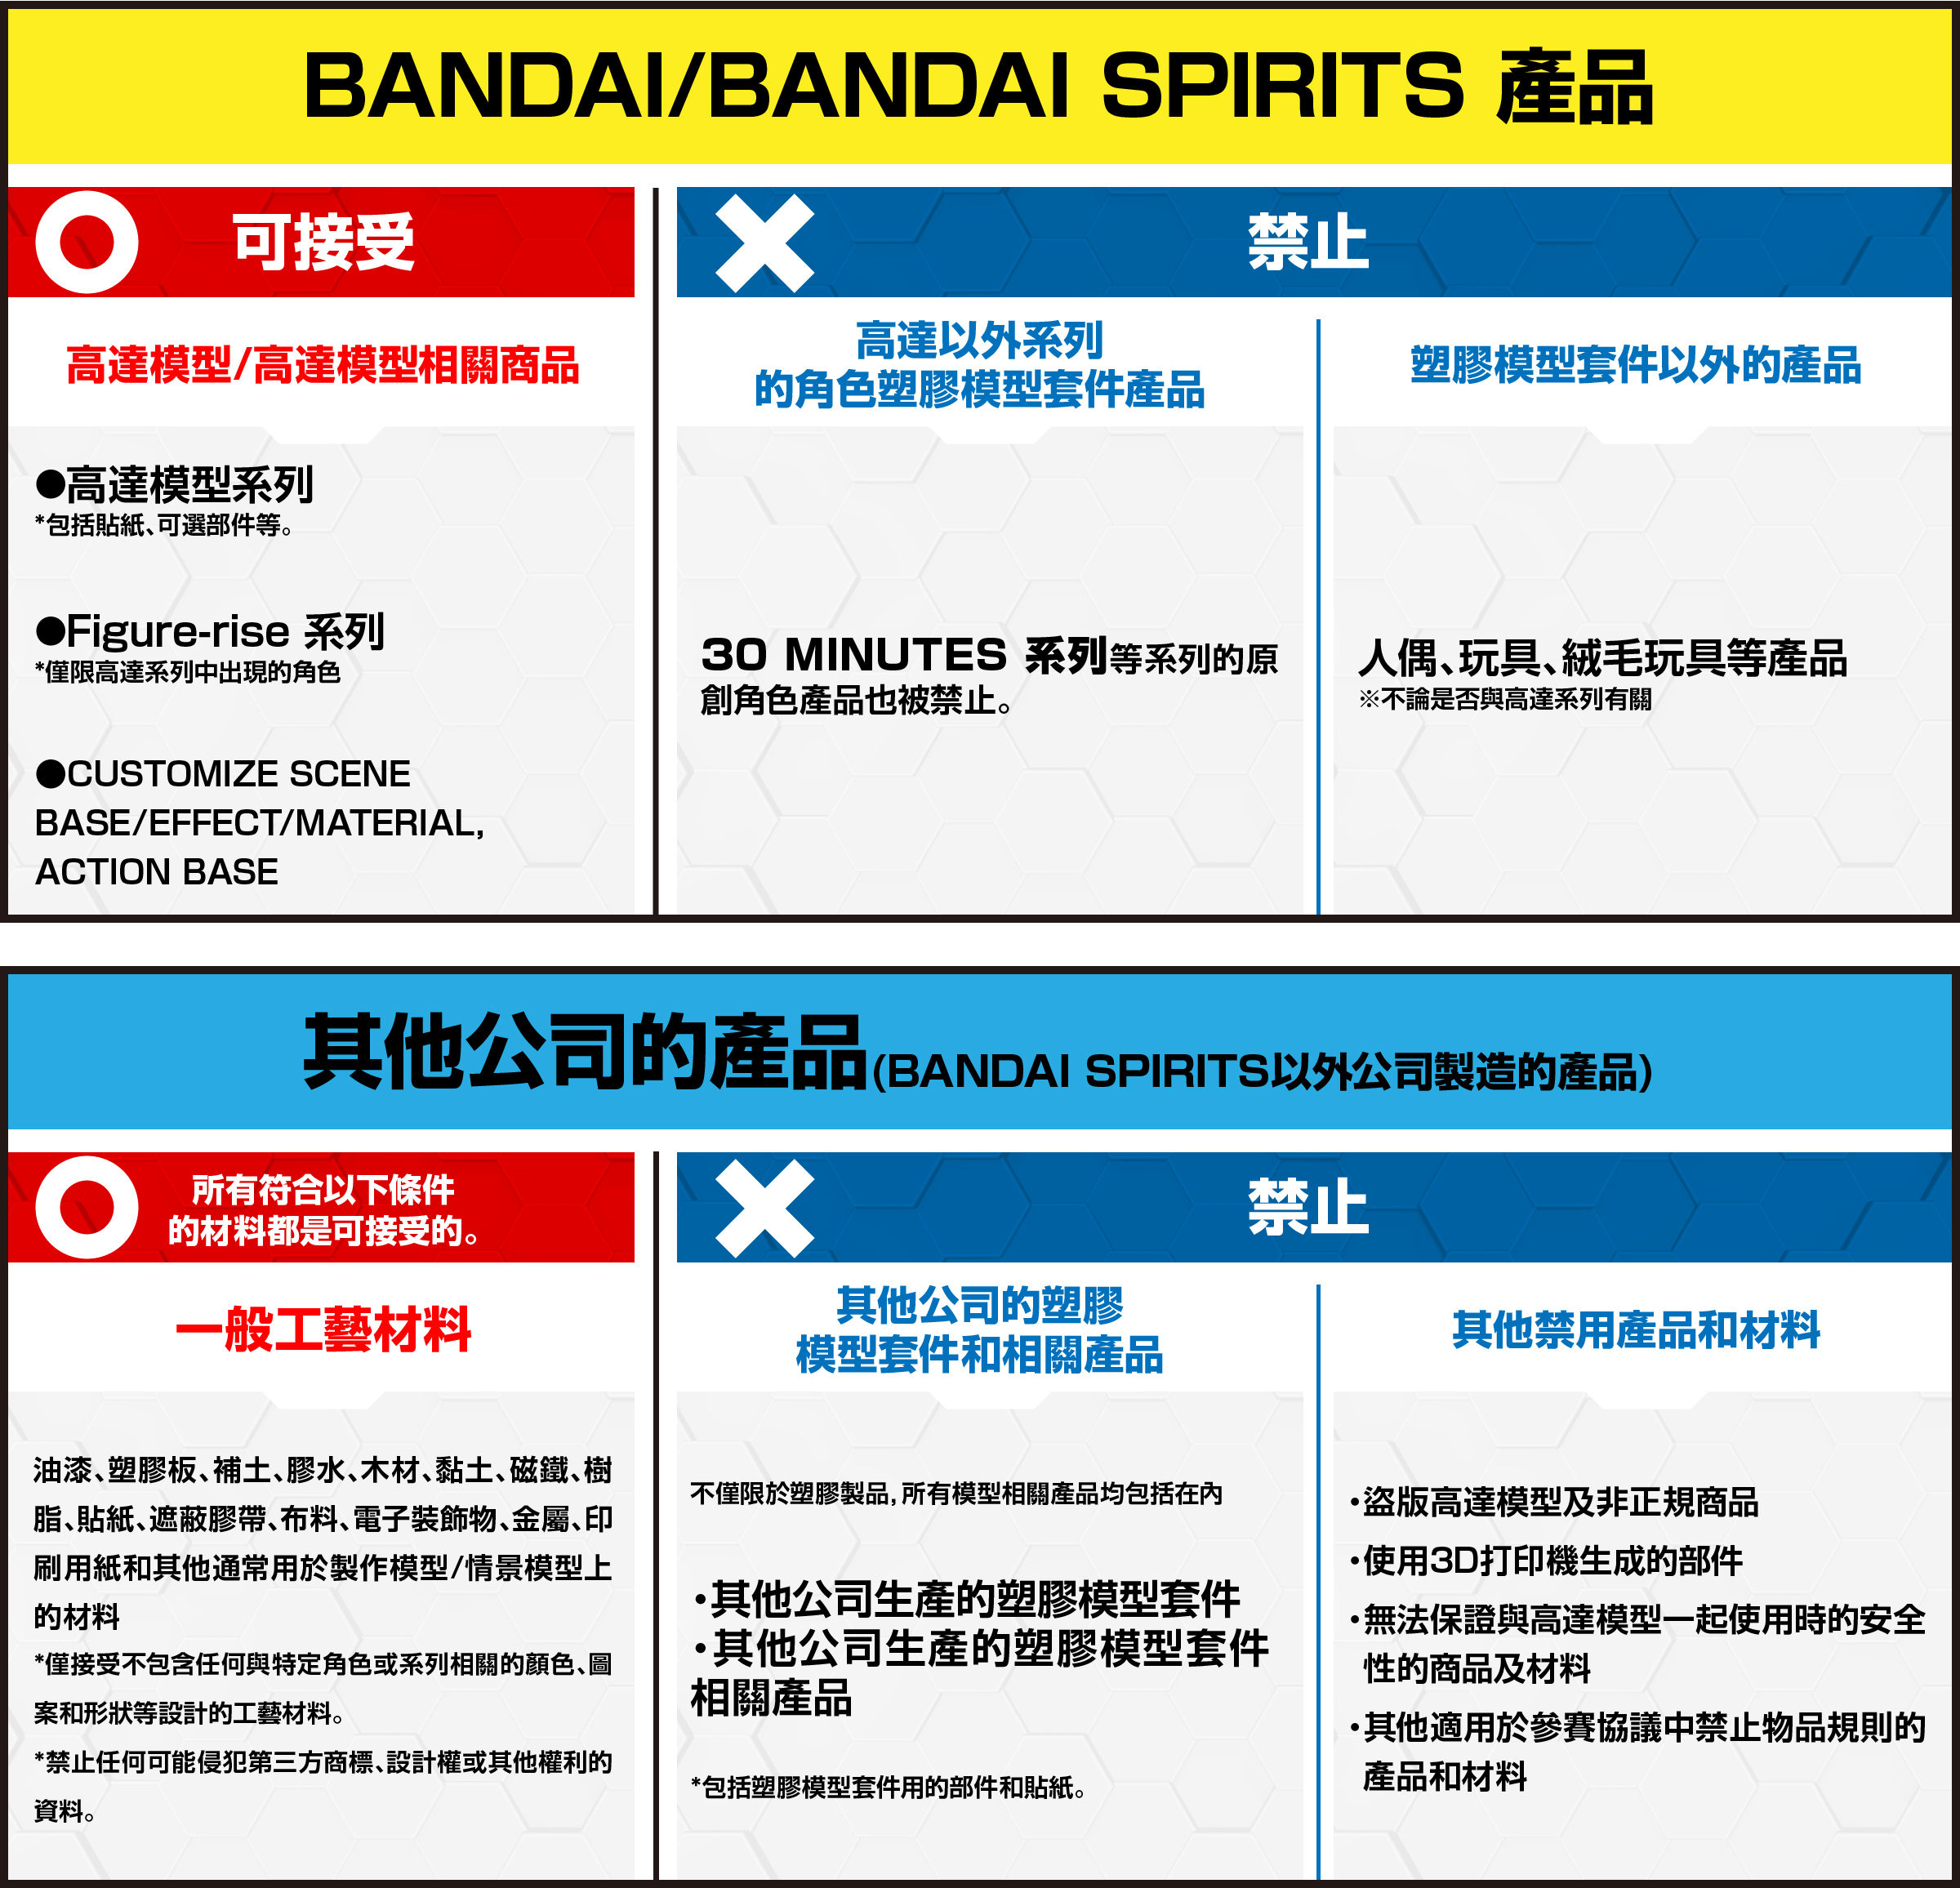 BANDAI/BANDAI SPIRITS 產品